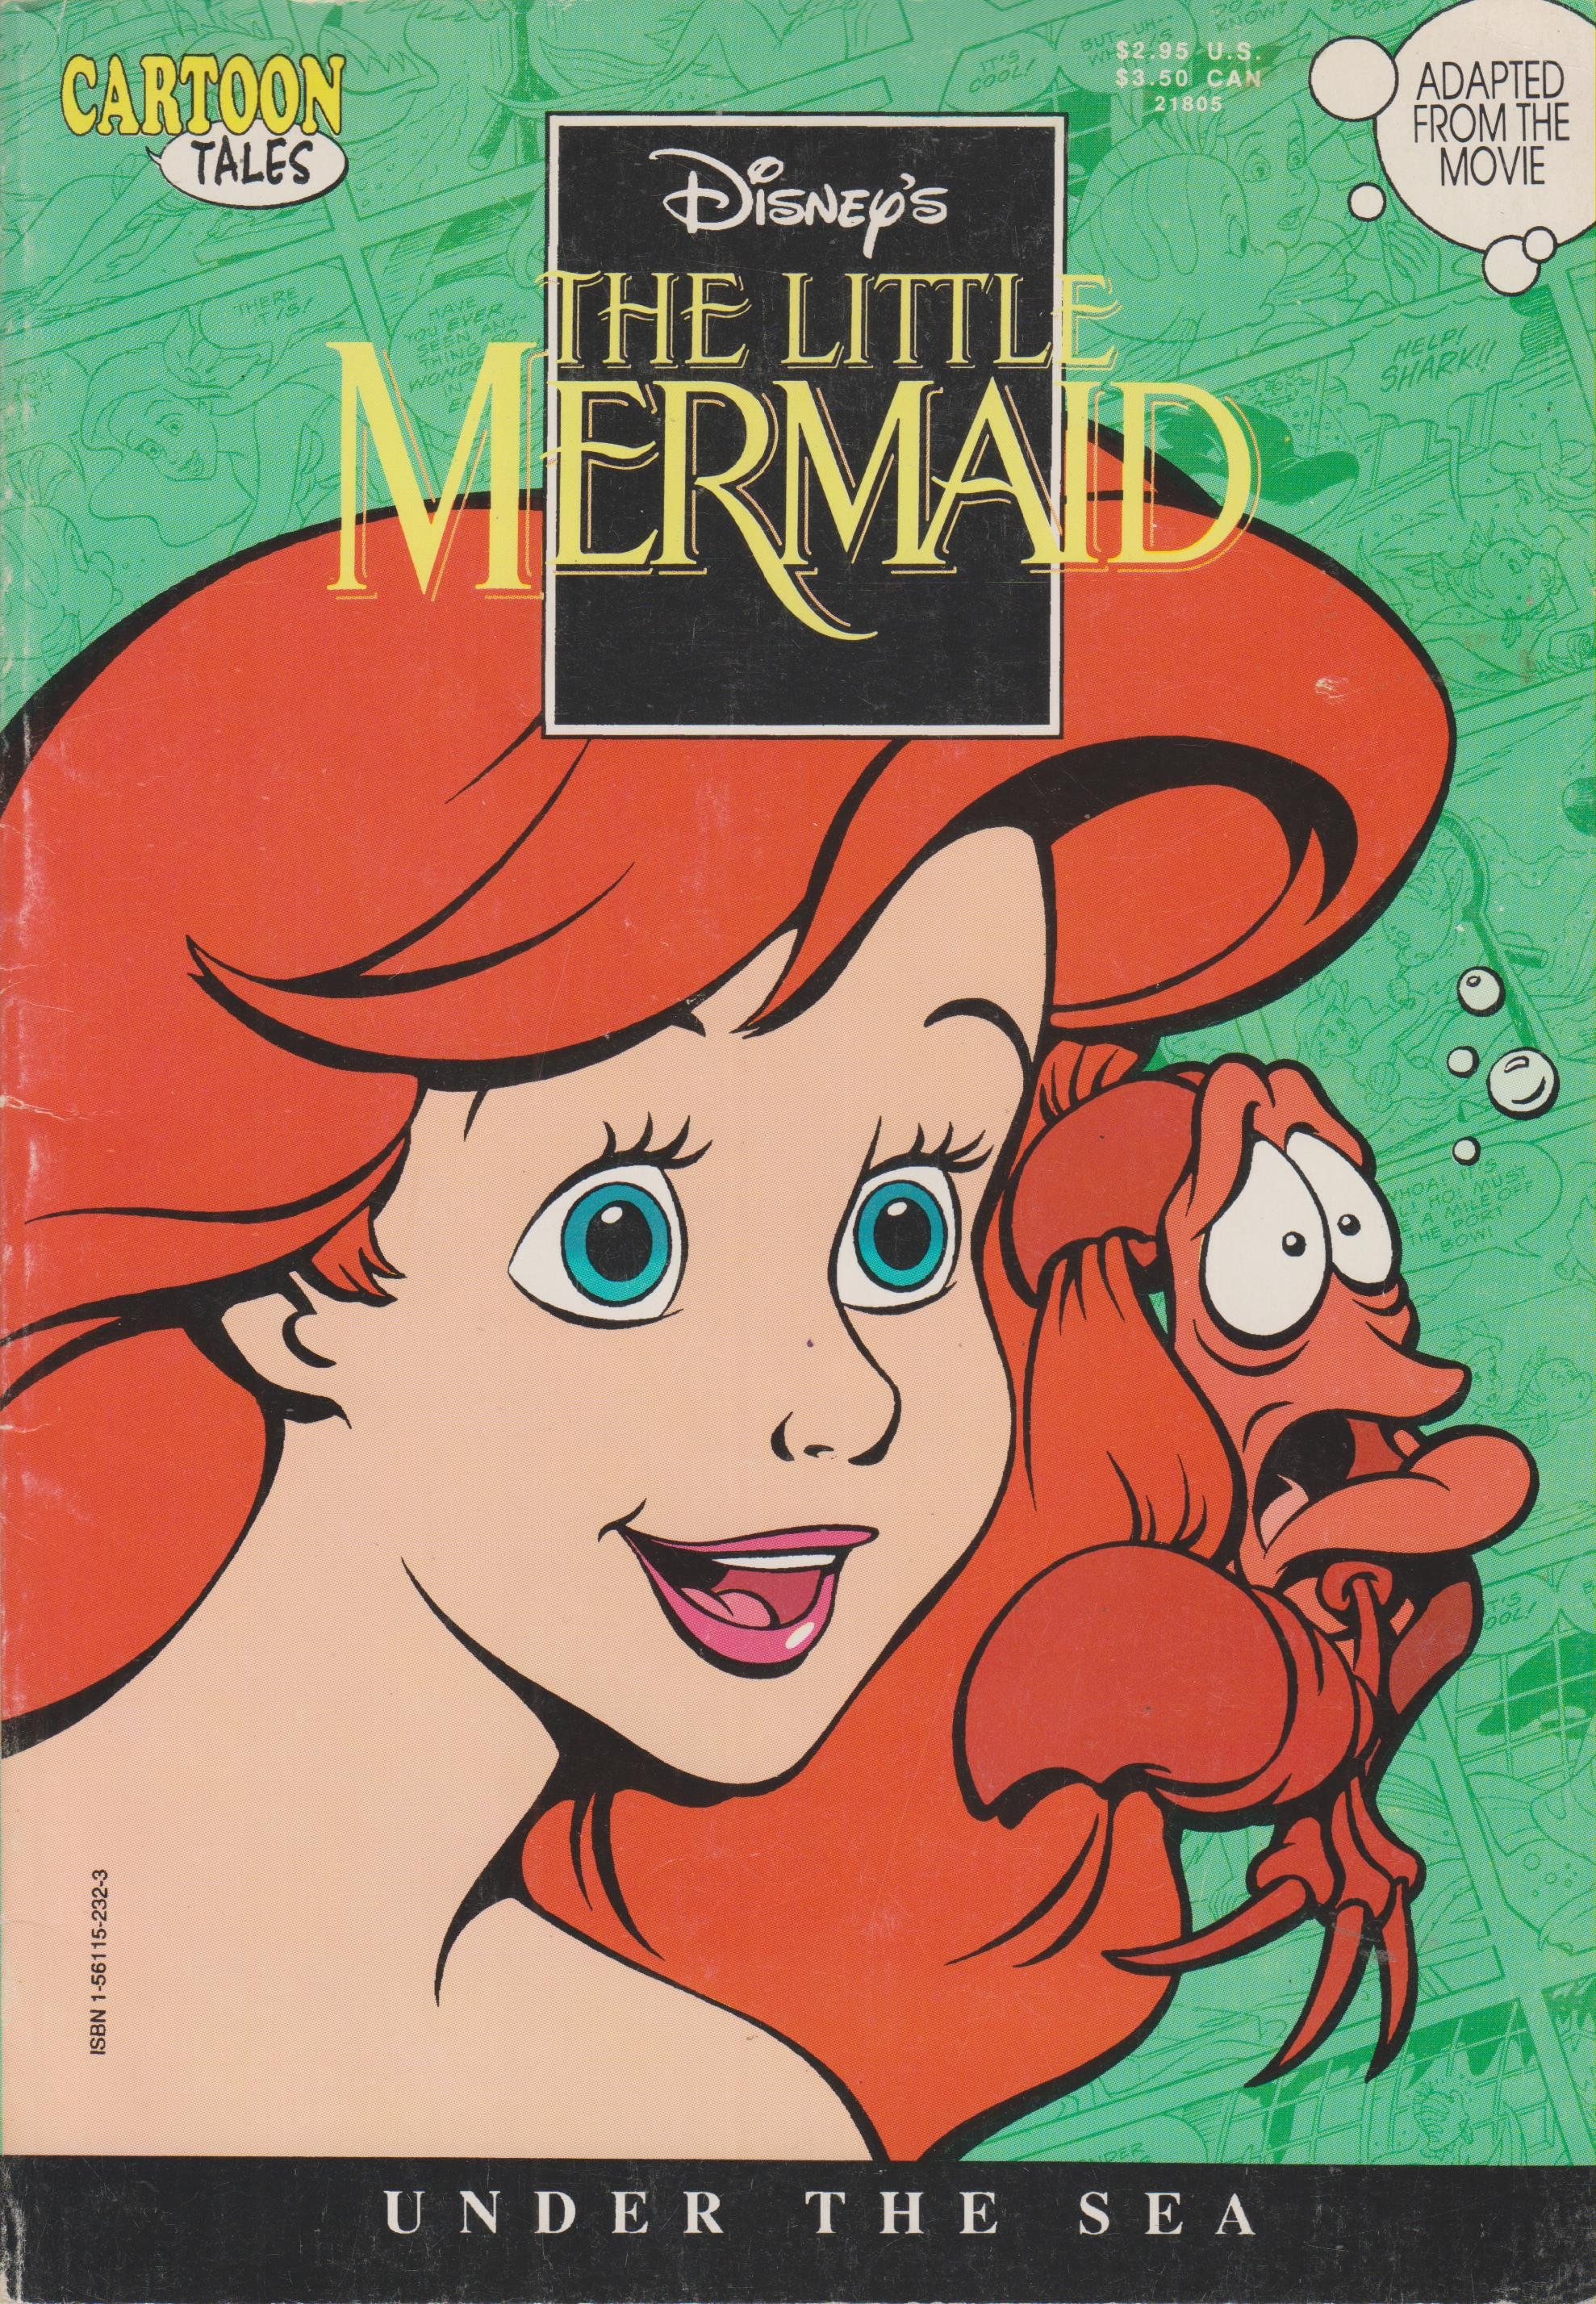 Disney's Cartoon Tales: The Little Mermaid Comic